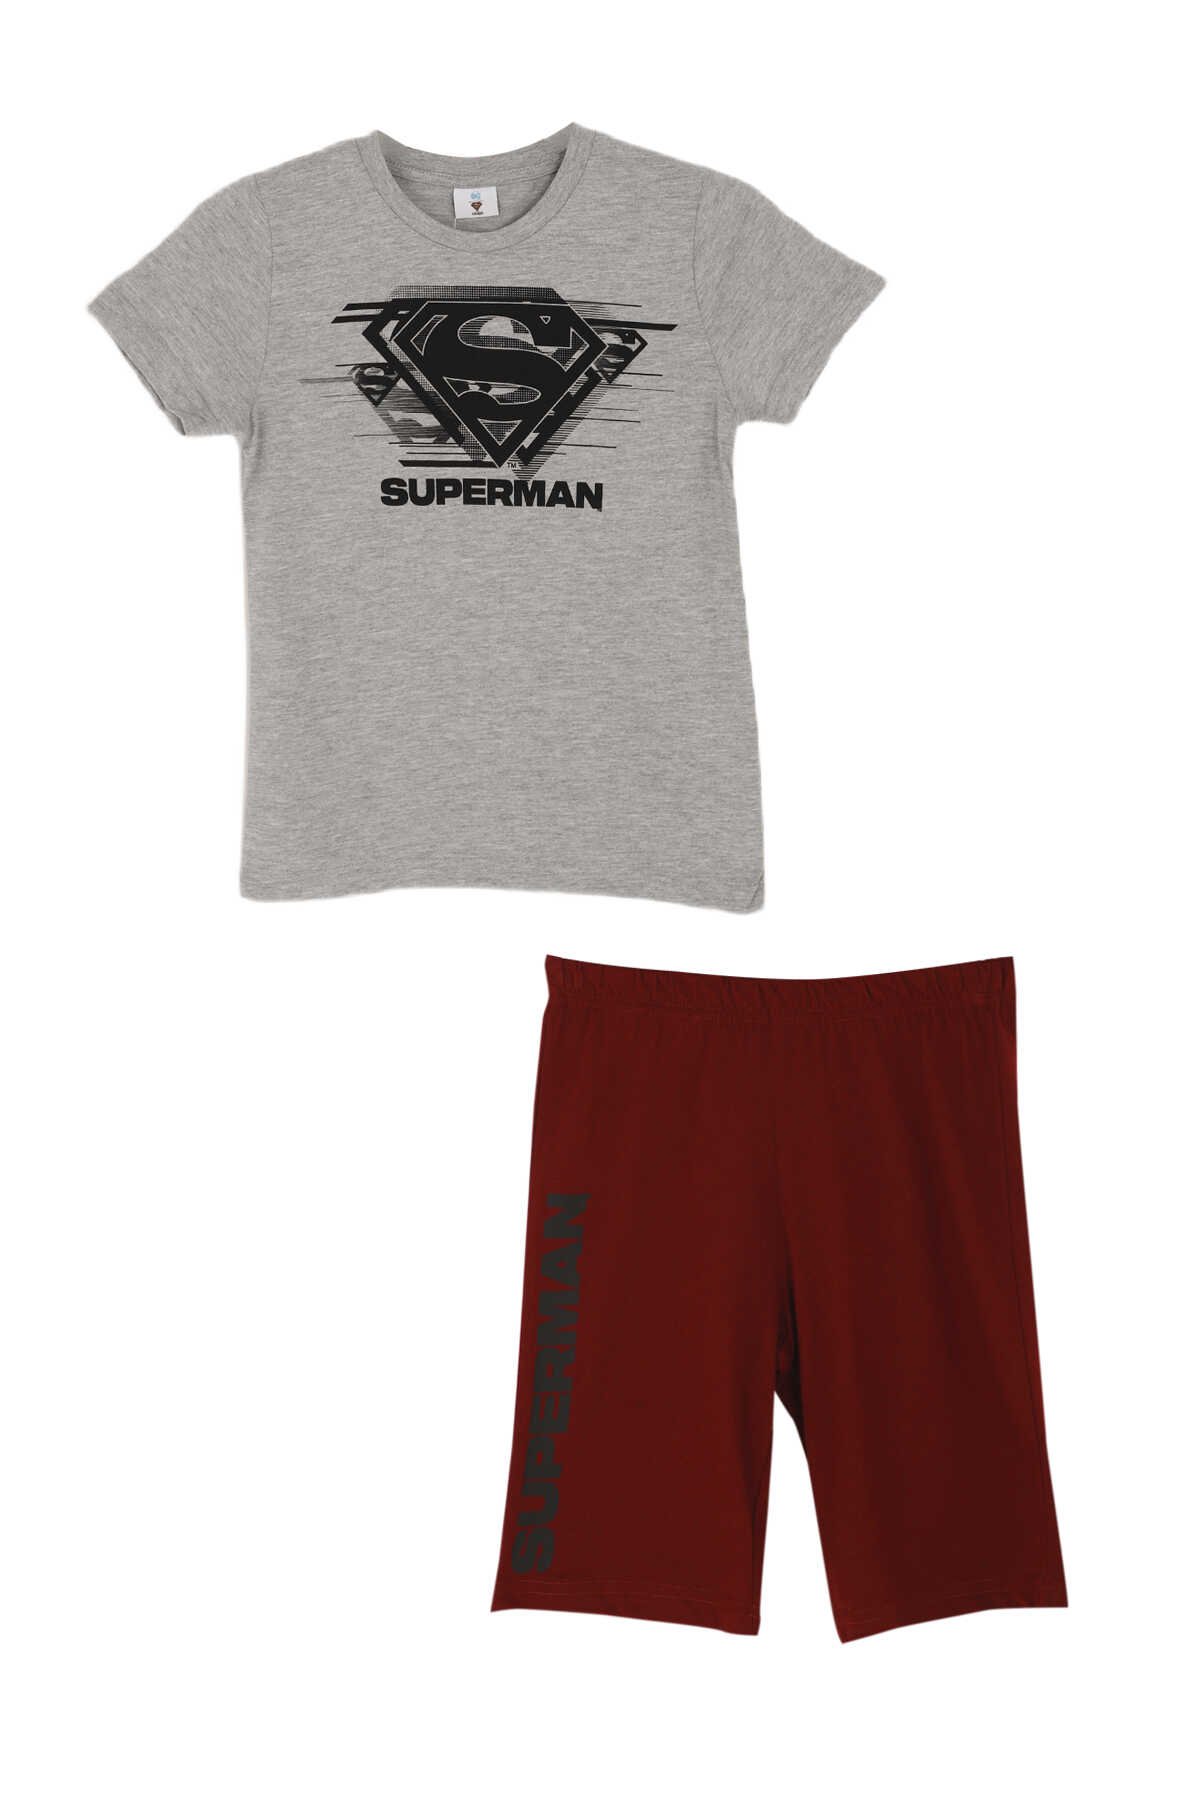 SuperMan - SuperMan L1644-3 Erkek Çocuk Kapri Takım Gri / Melanj